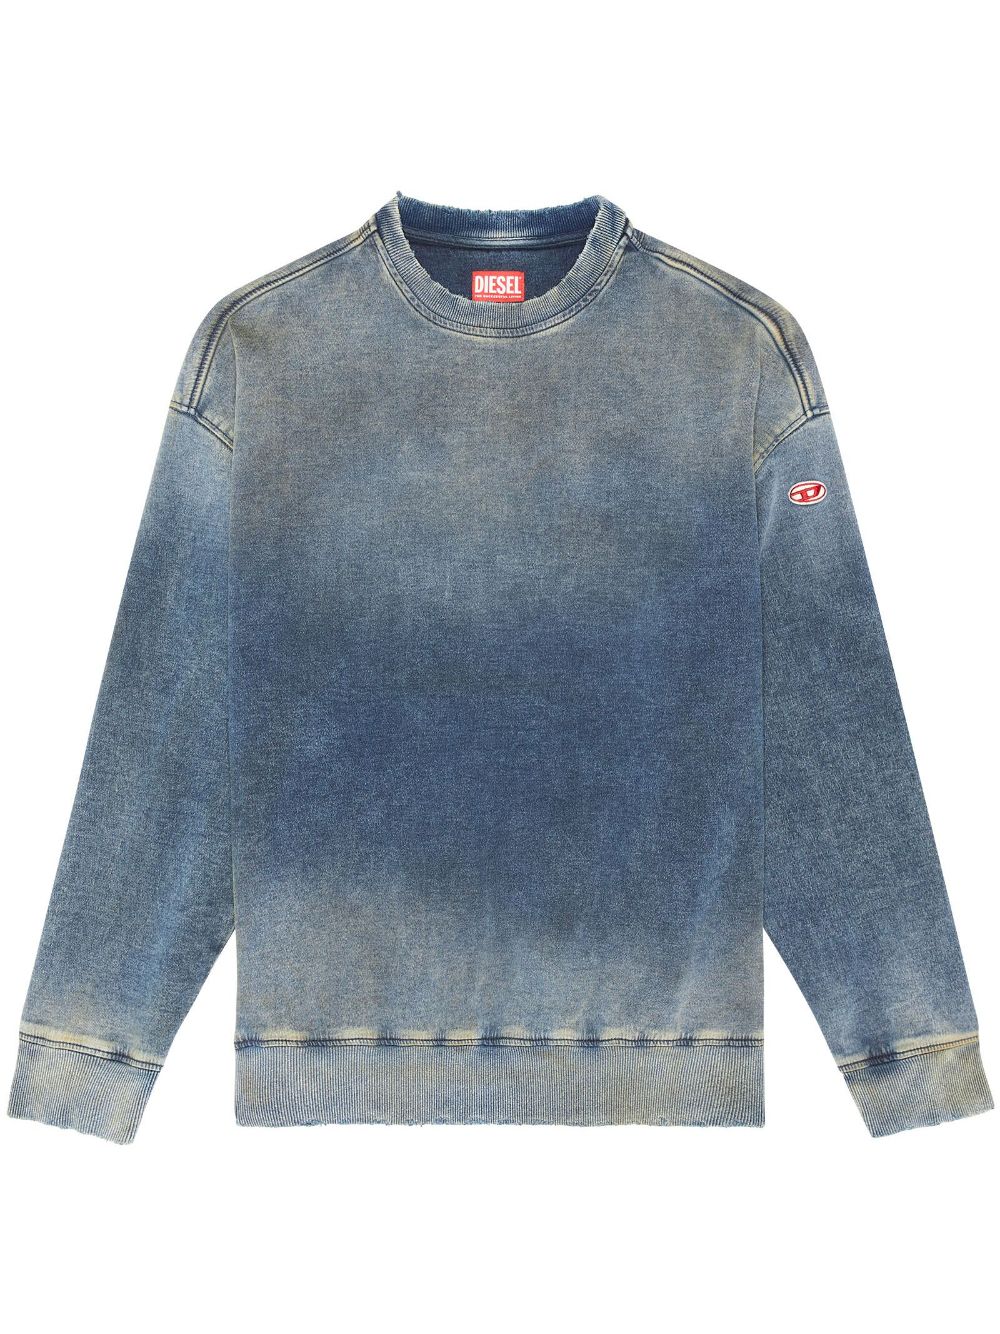 Diesel Cotton Denim Loose Sweatshirt In Blue